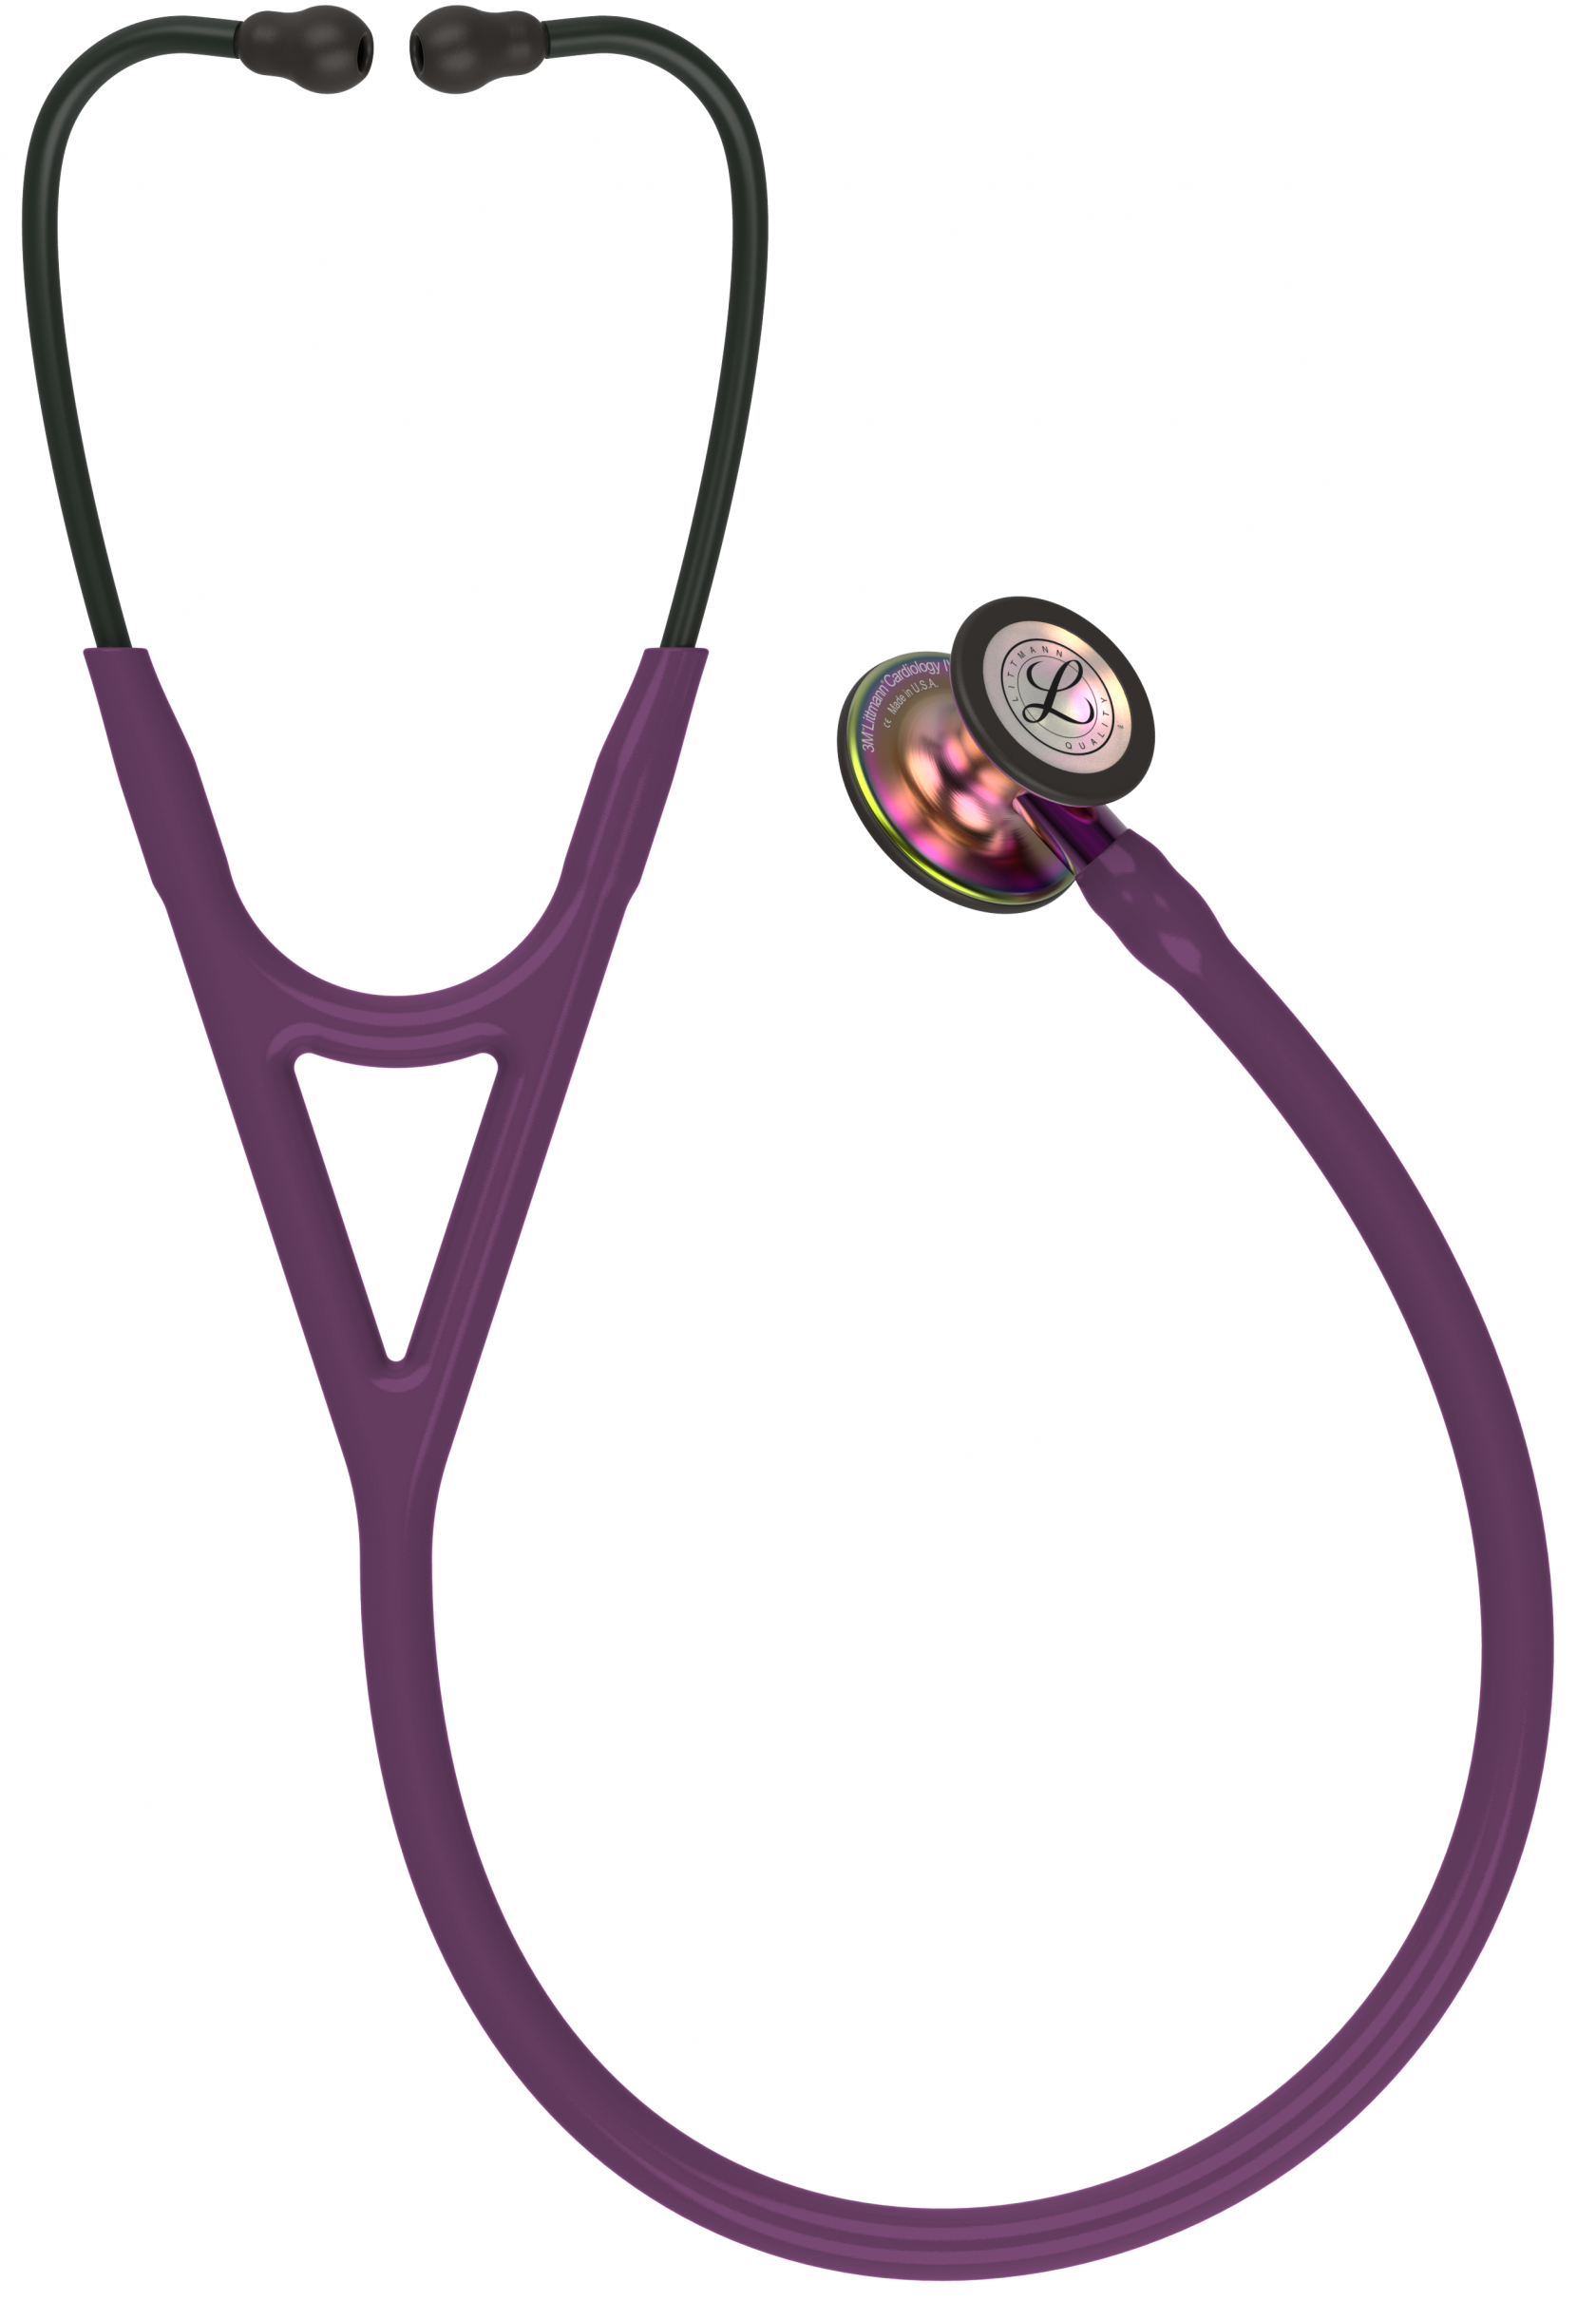 3M Stethoscope Littmann Cardiology IV Plum with Violet Stem and Rainbow Finish image 0